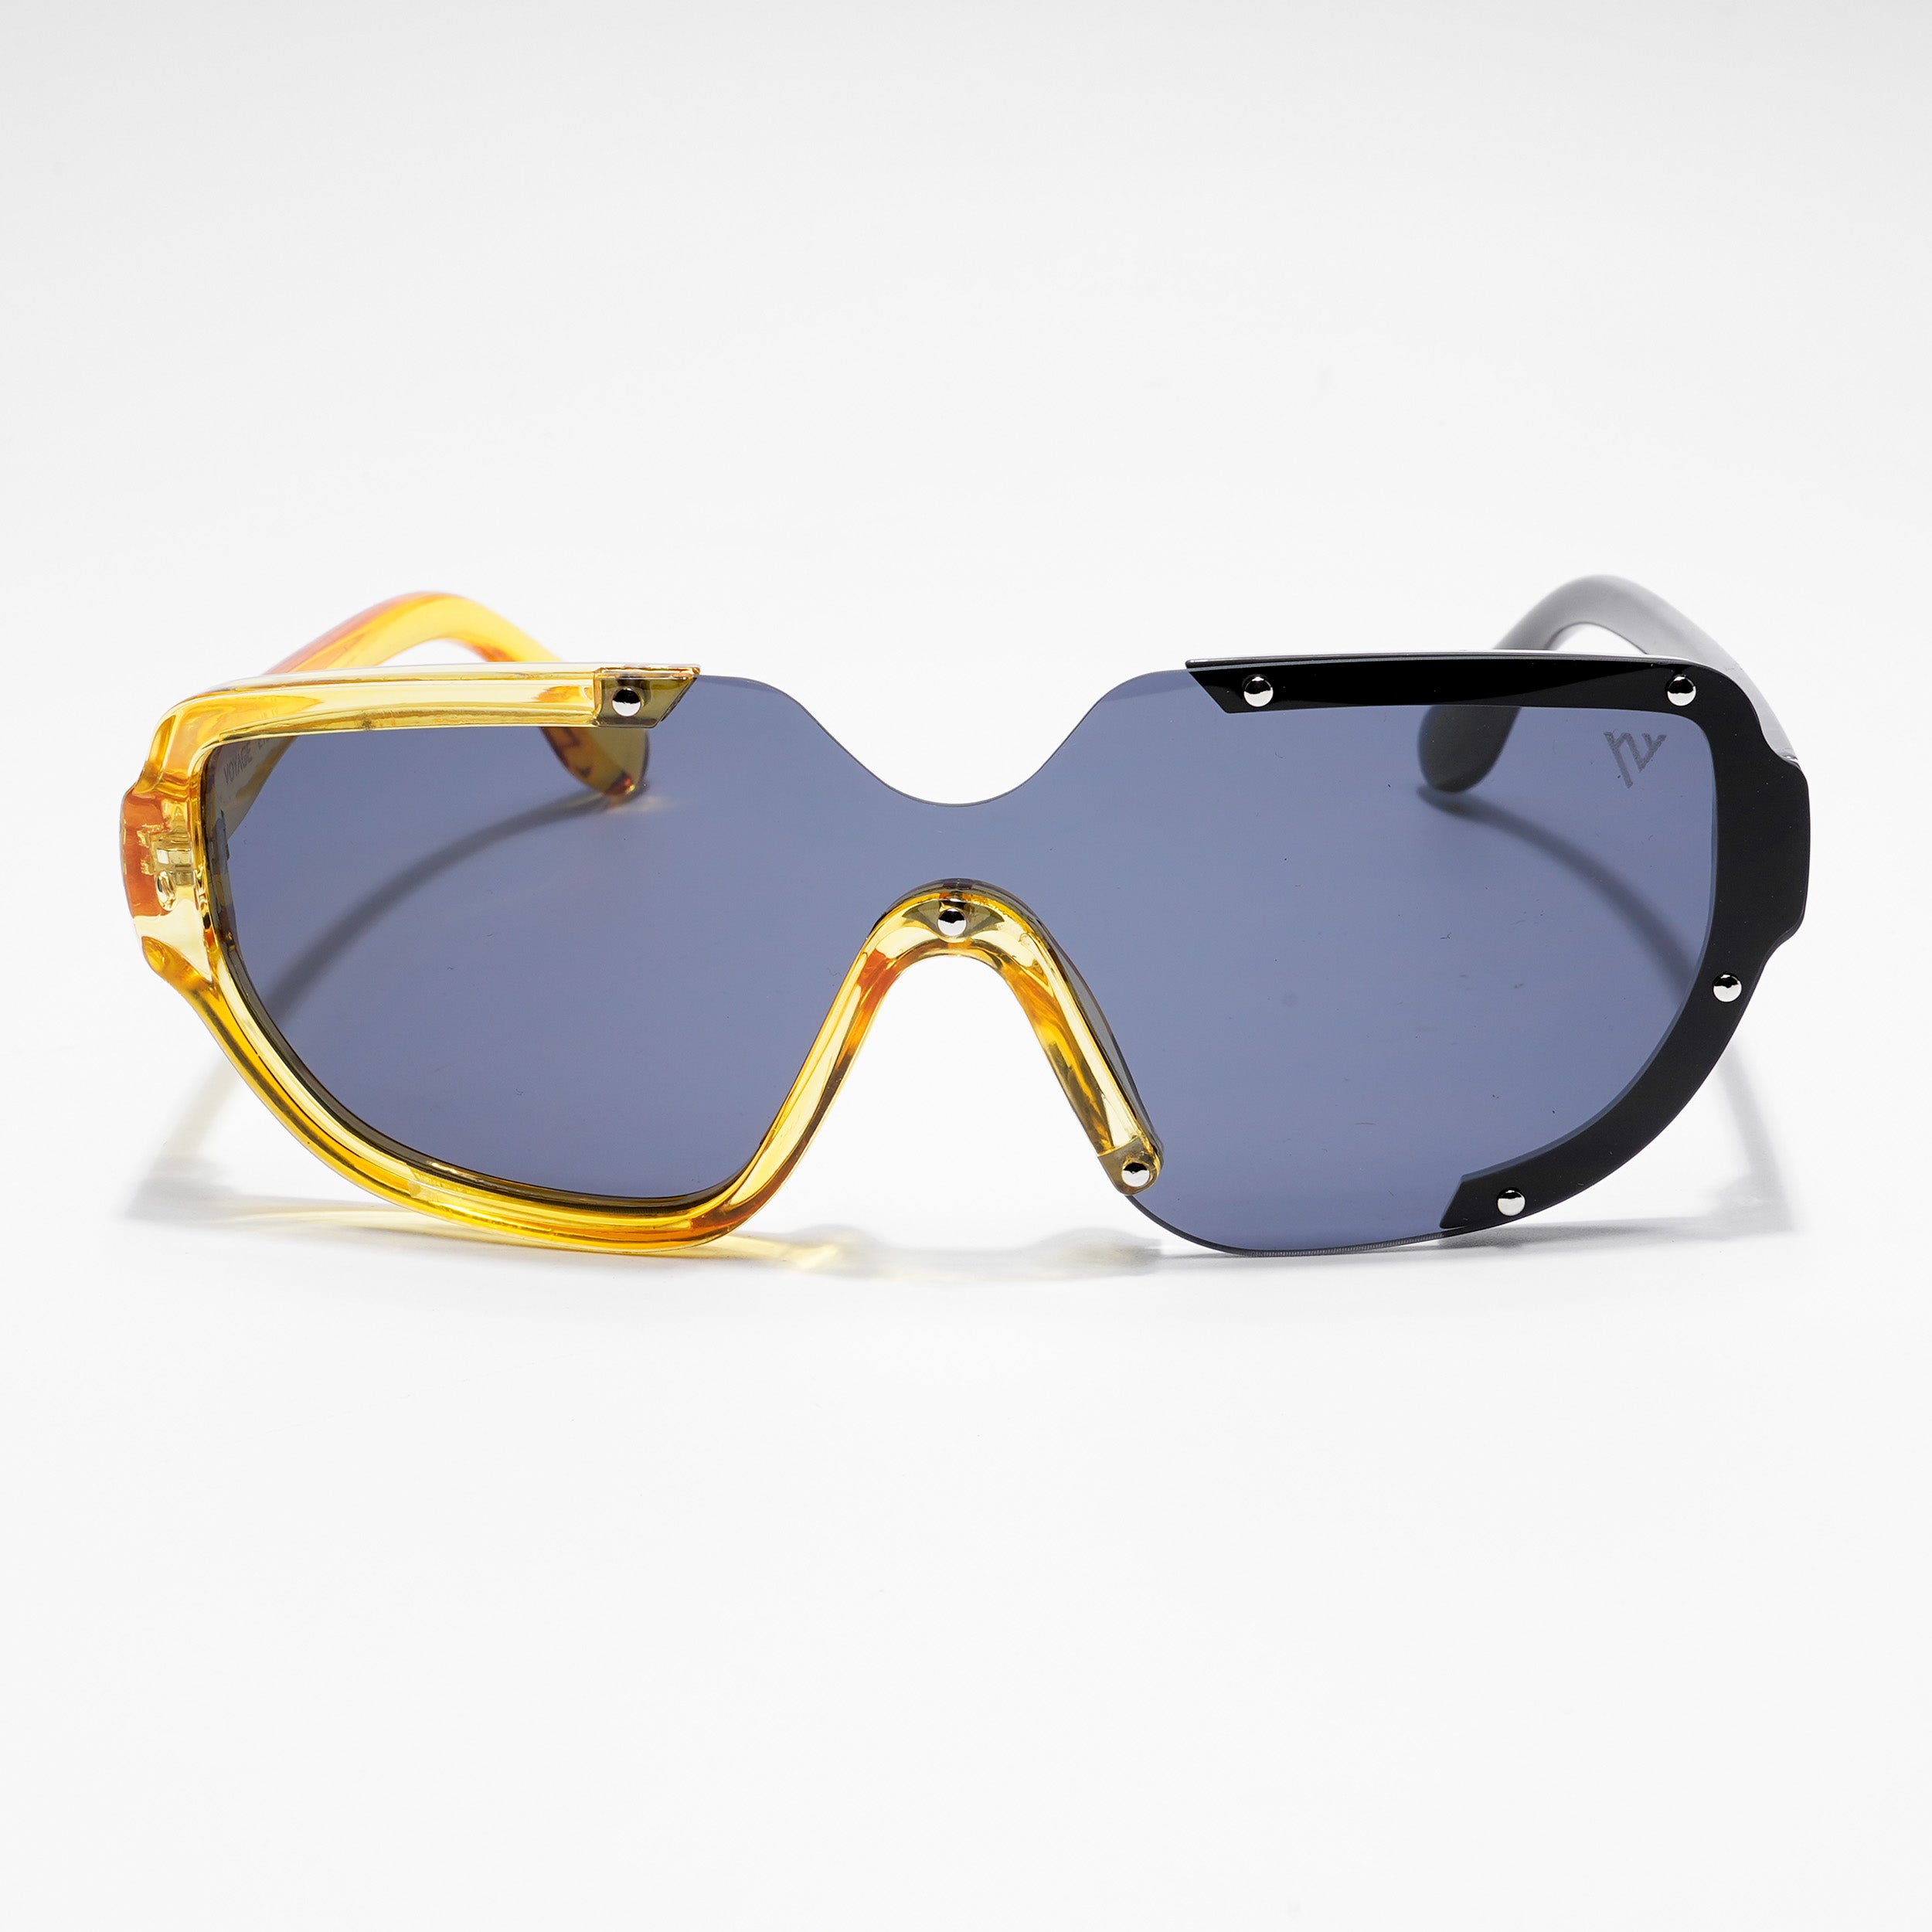 Voyage Black Wayfarer Sunglasses for Men & Women - MG4184